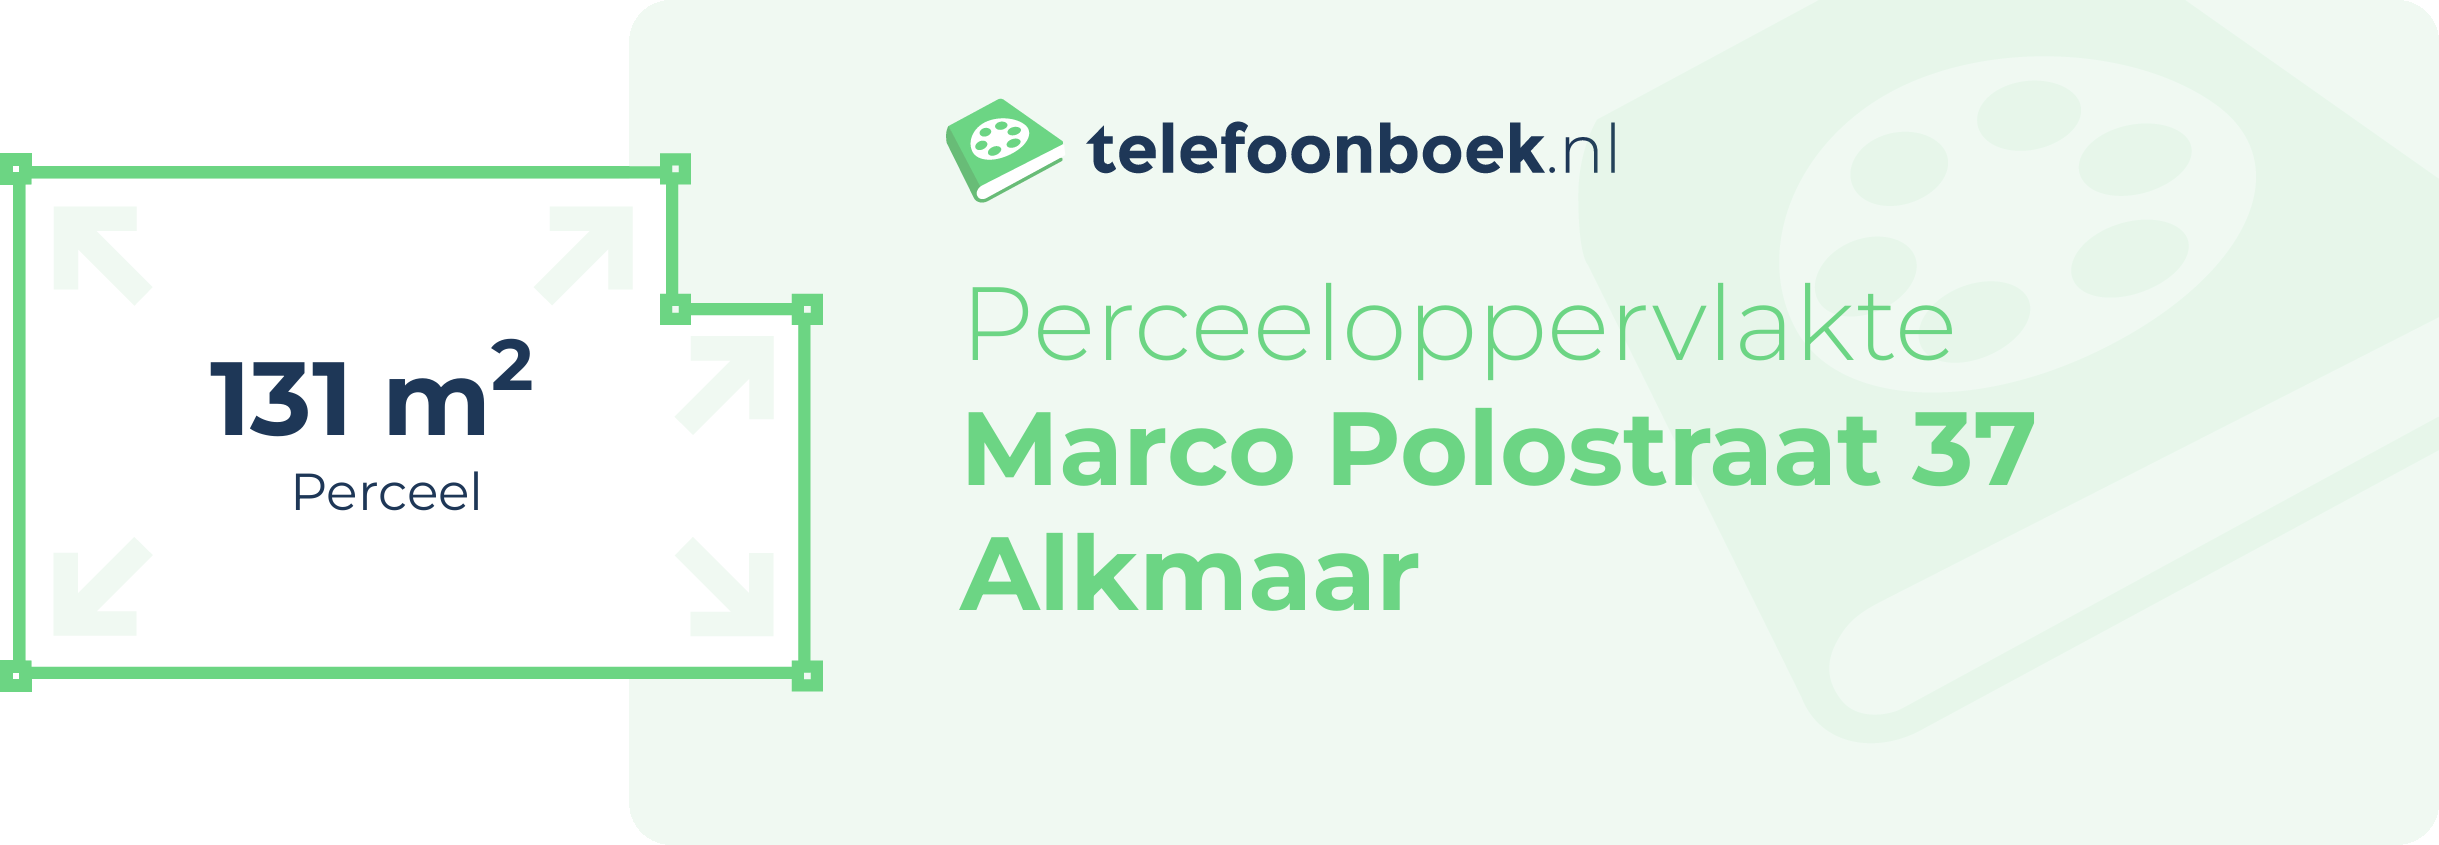 Perceeloppervlakte Marco Polostraat 37 Alkmaar